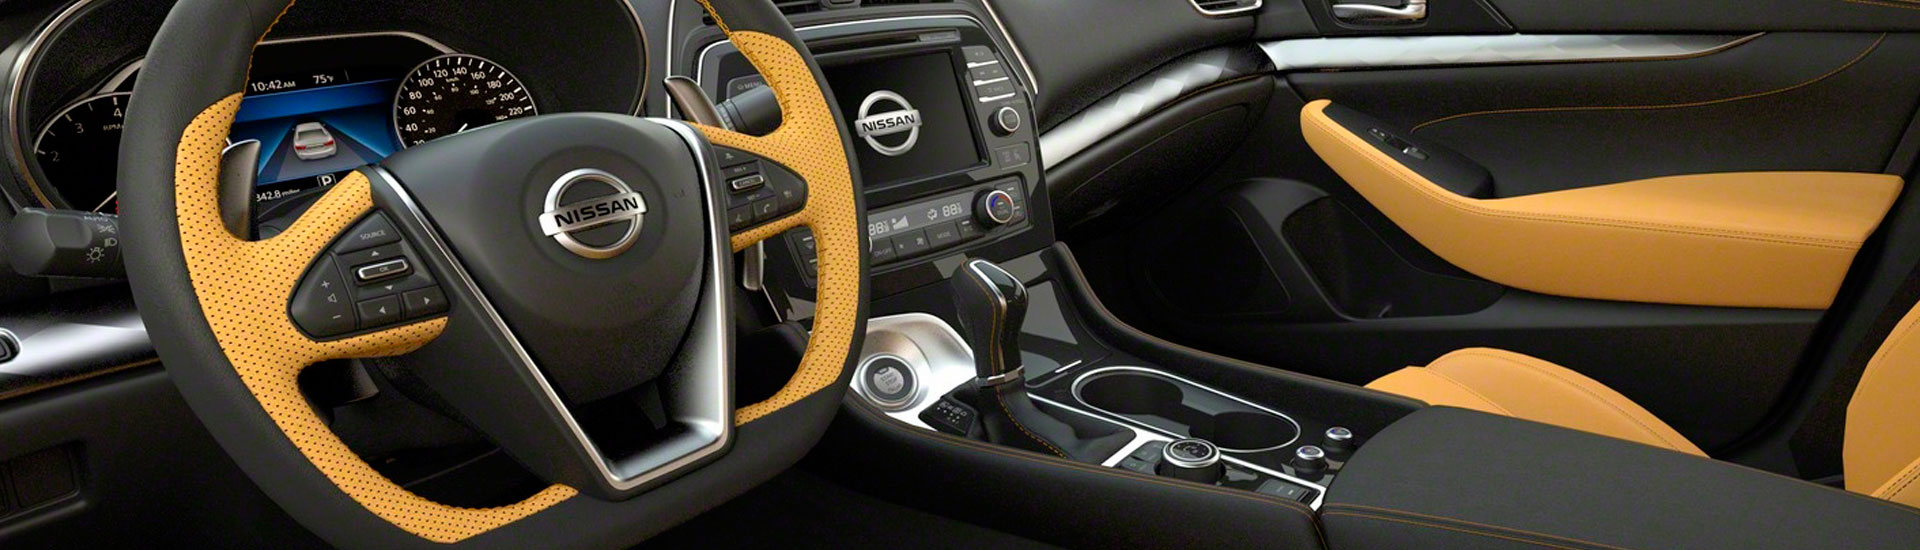 Nissan Altima Dash Kits | Wood Dash Kit